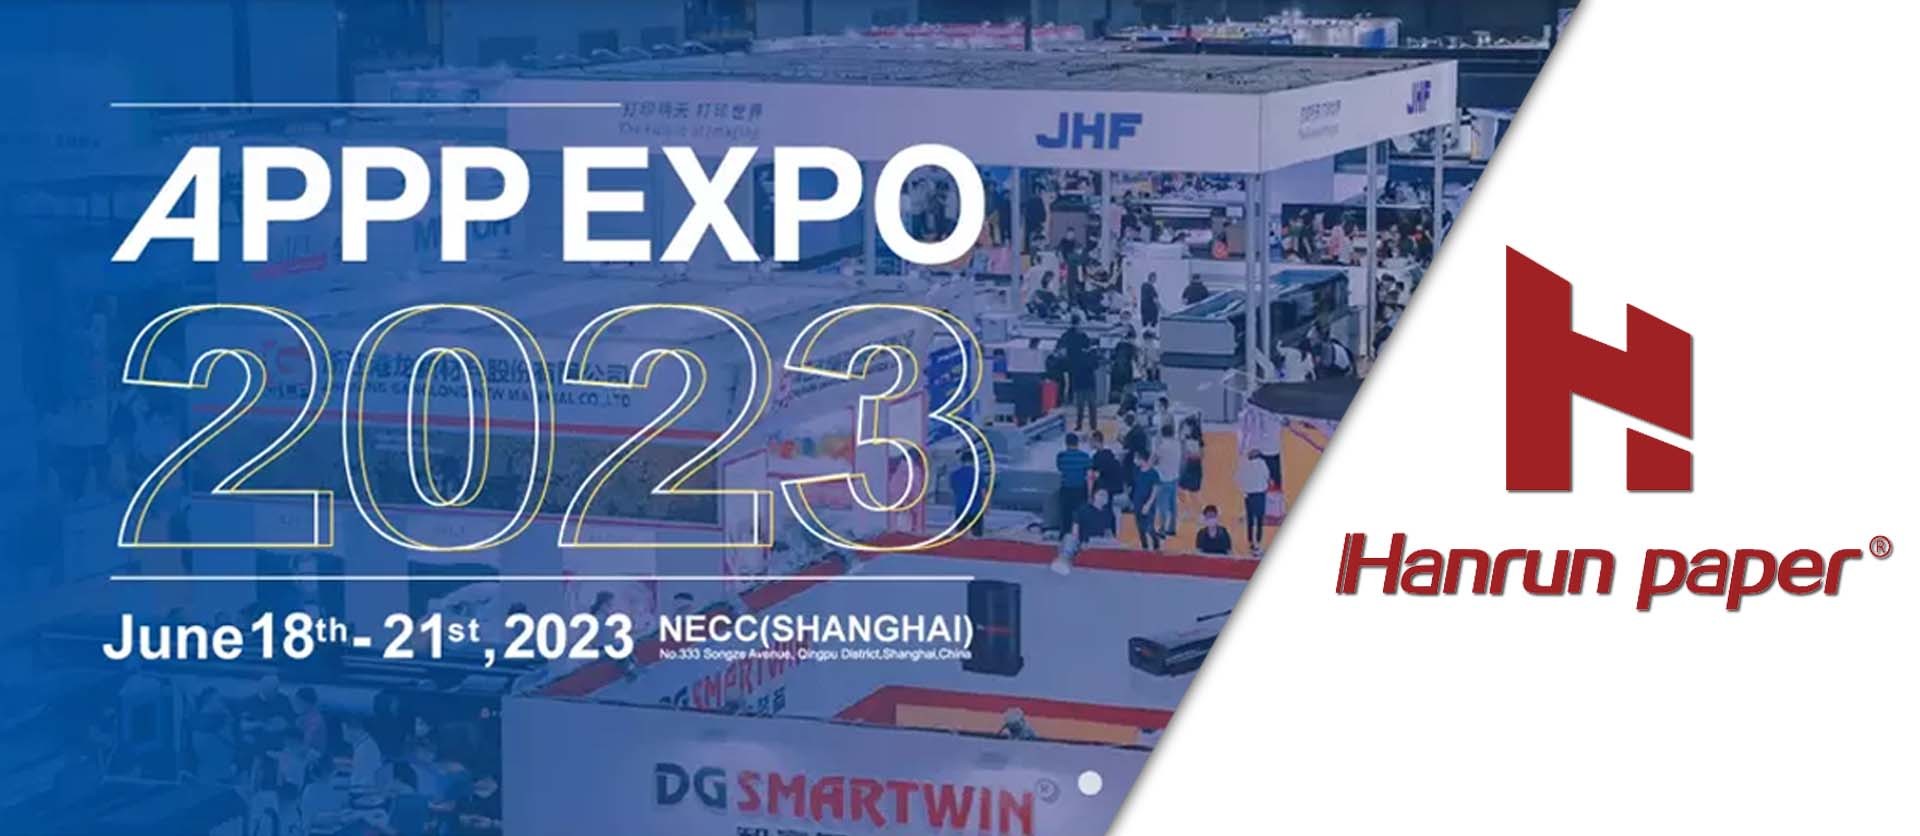 Hanrun Paper Appp Expo 2023